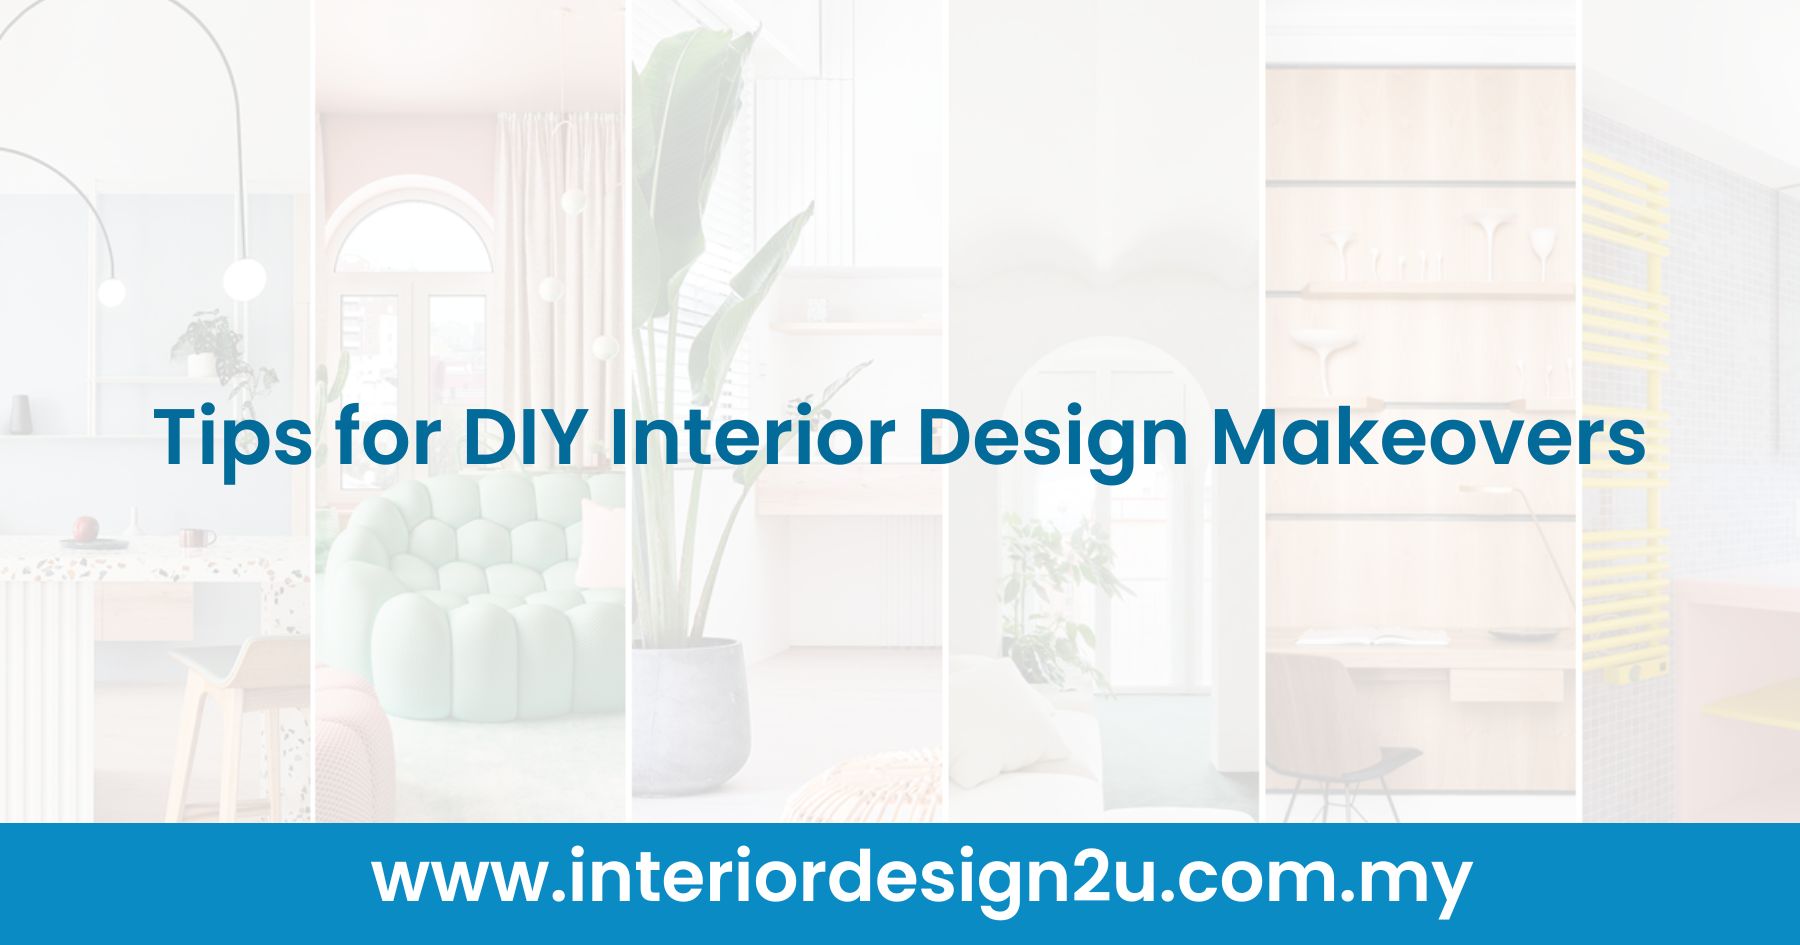 Tips for DIY Interior Design Makeovers